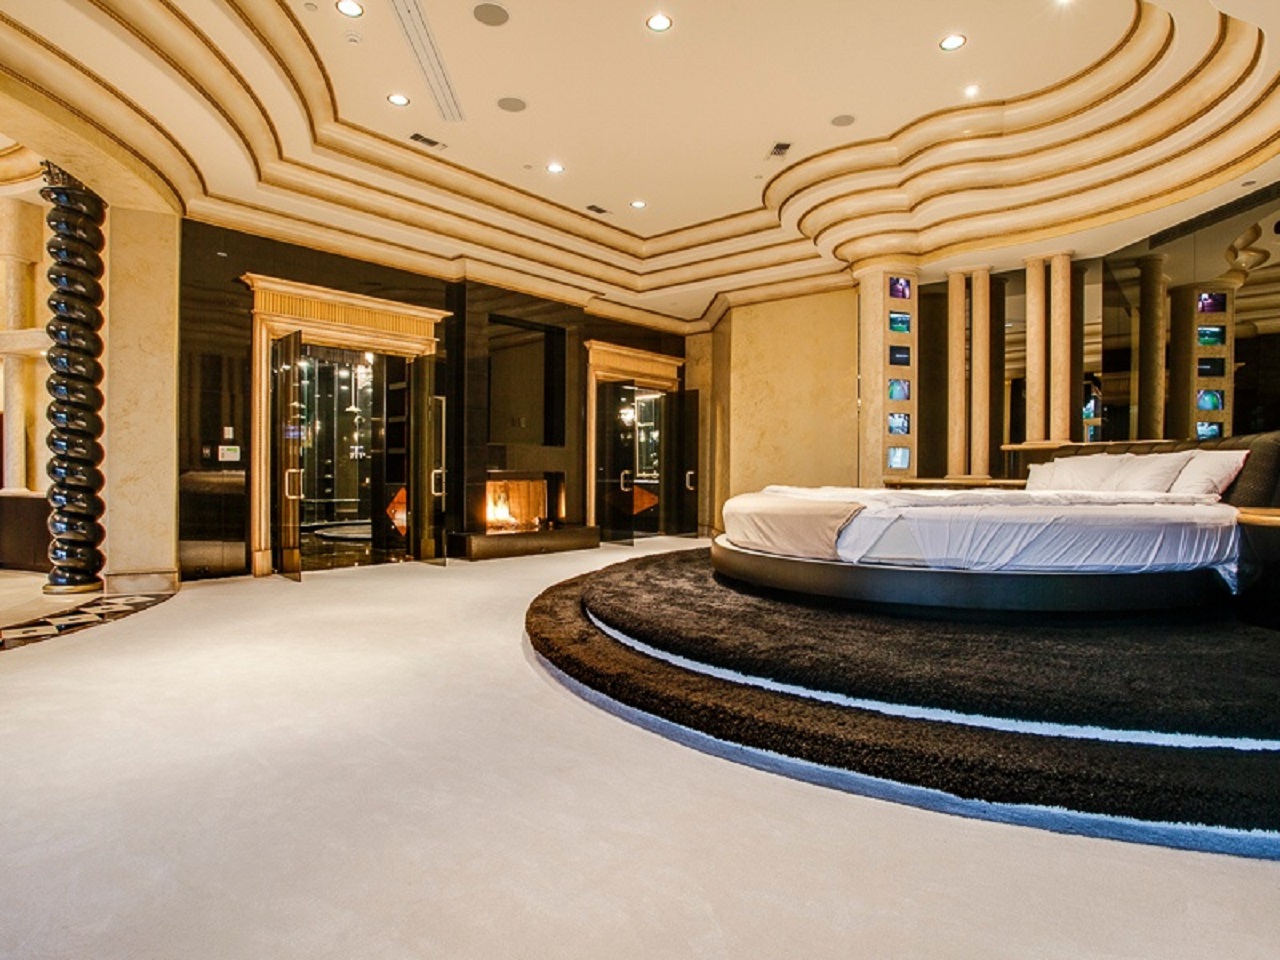 New Luxury Master Bedroom Ideas with Simple Decor